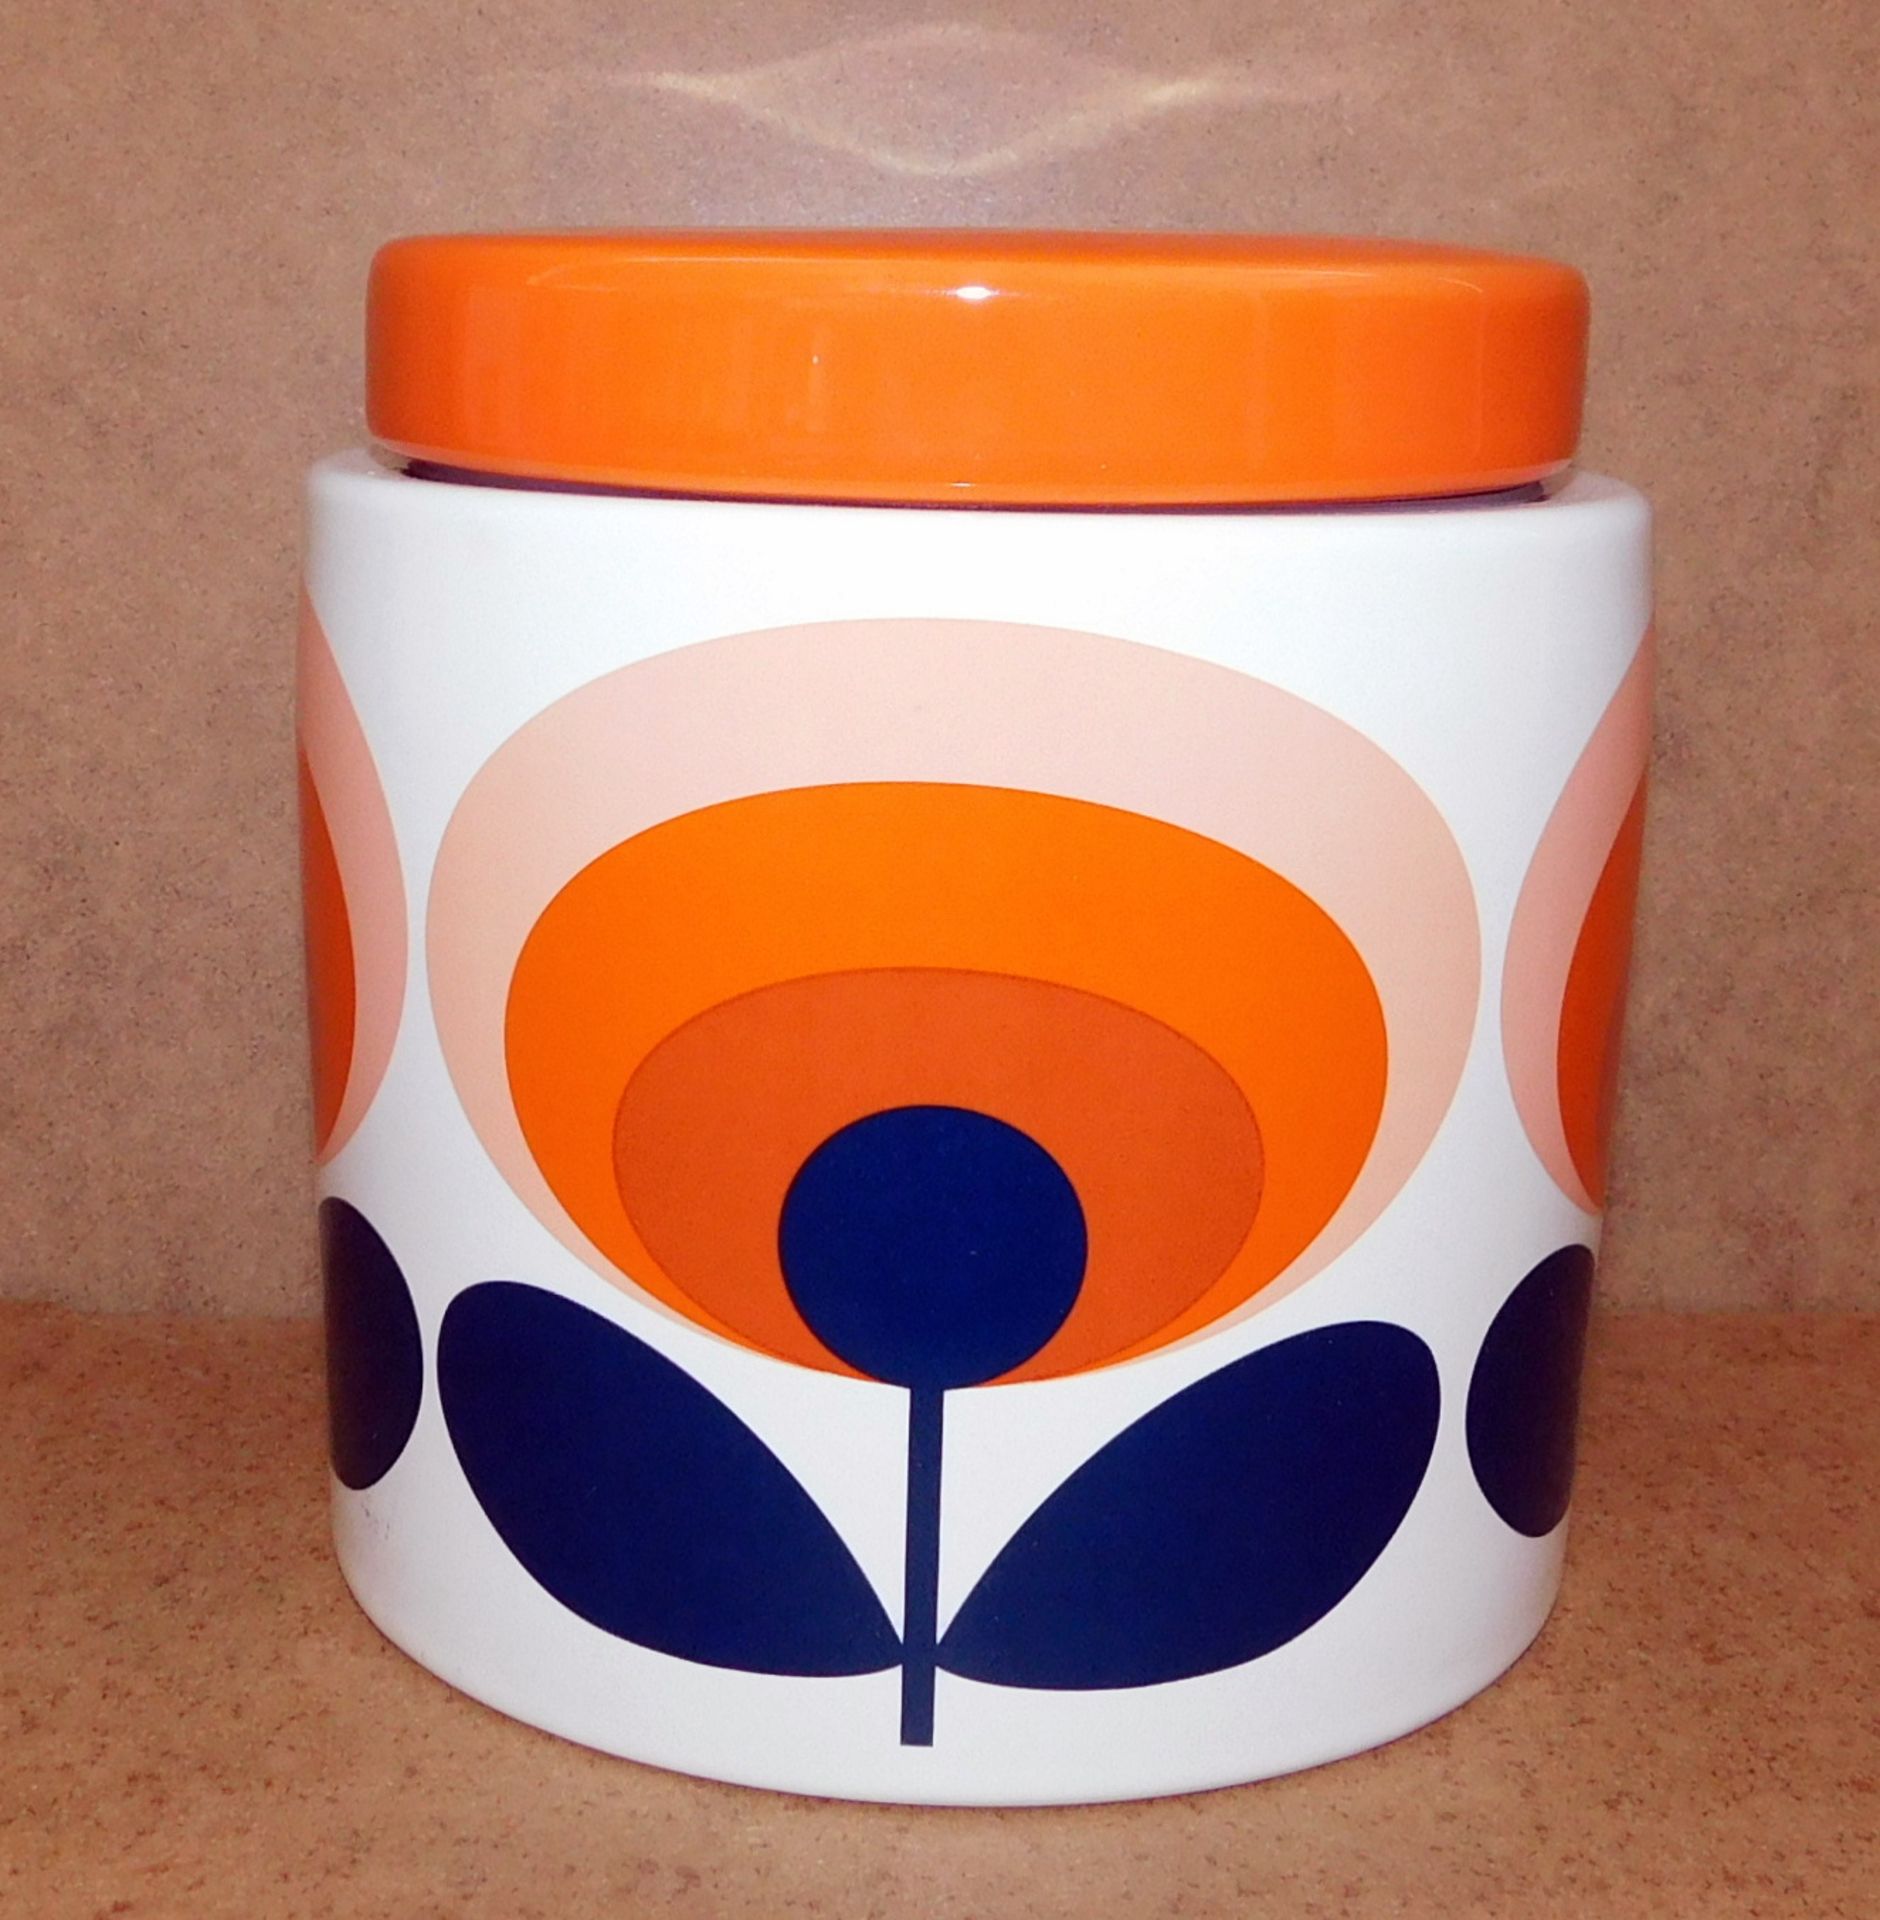 3 Orla Kiely Storage Jars, 1 Ltr, 70s Oval Flower/Orange, RRP £28 each